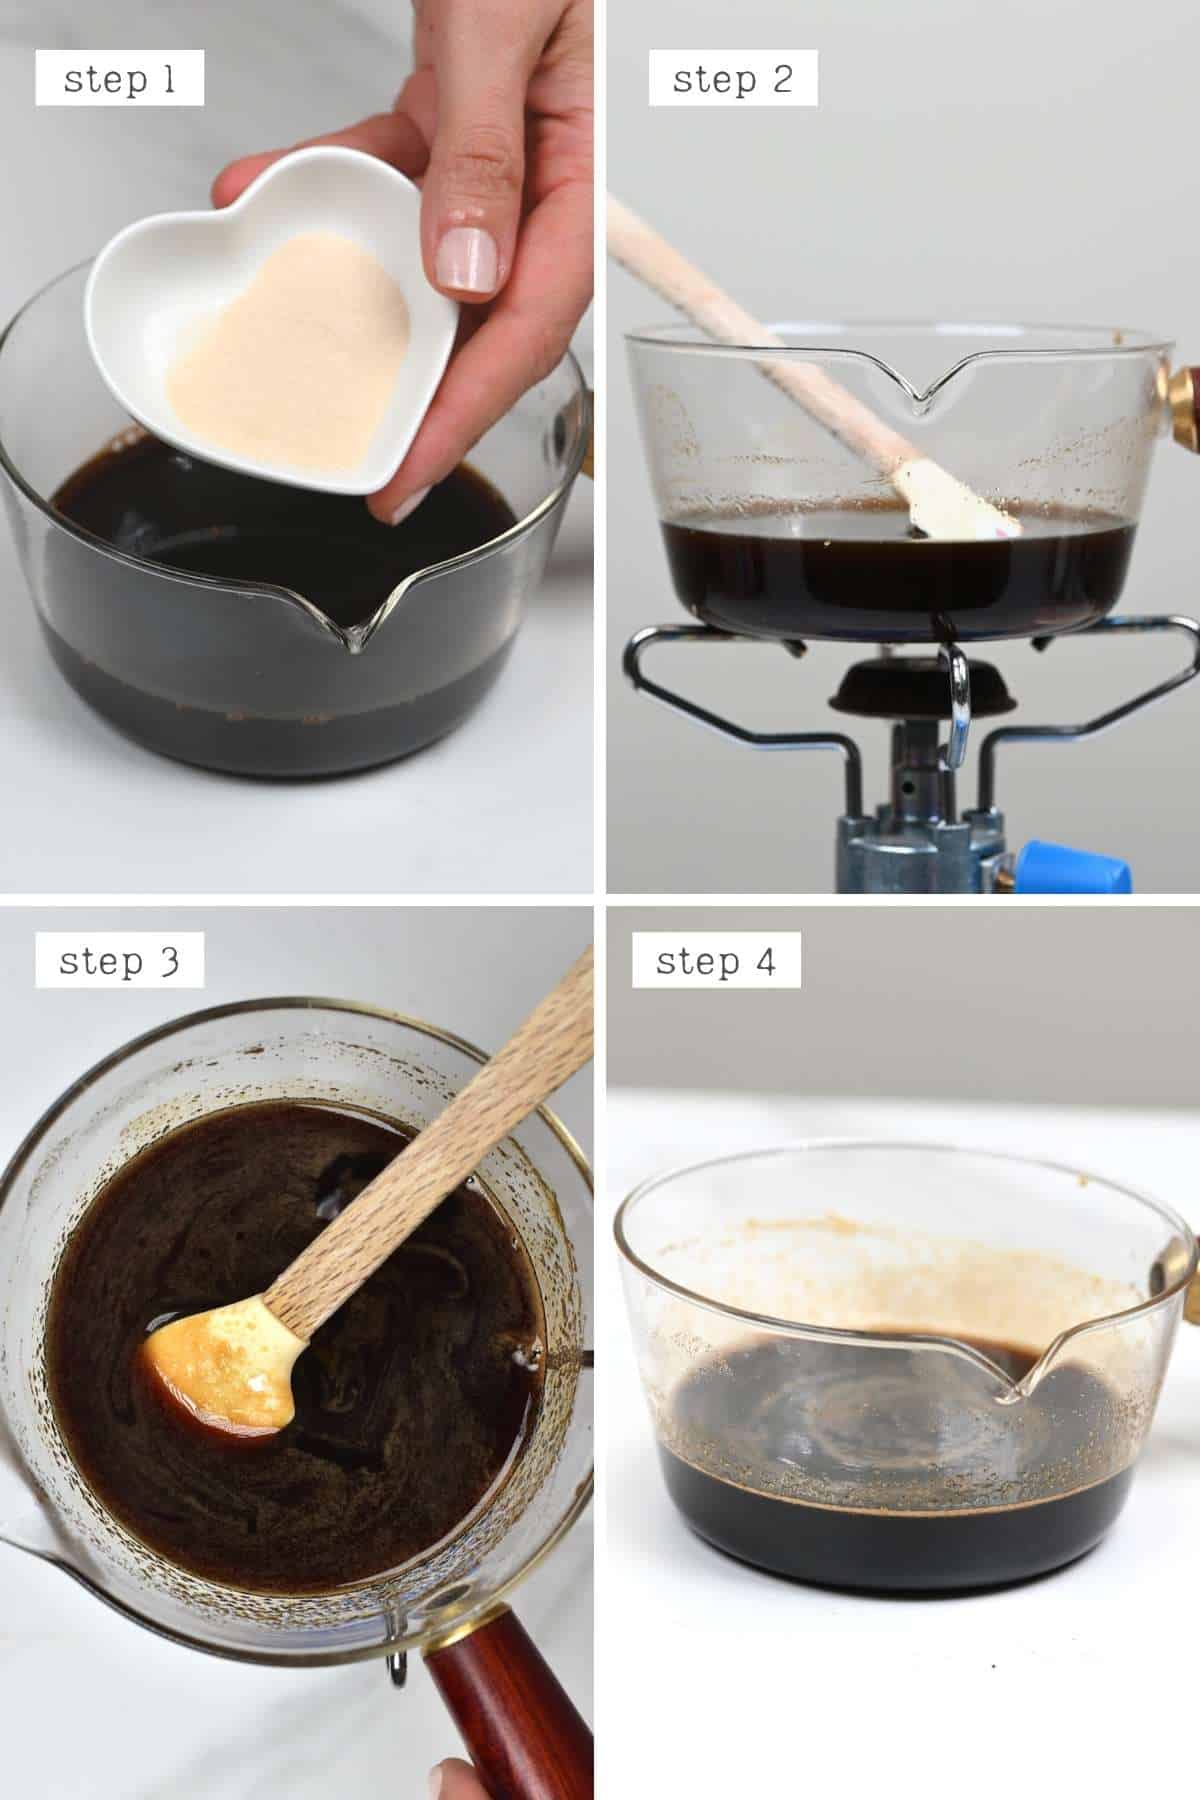 Steps for heating up vinegar and agar-agar